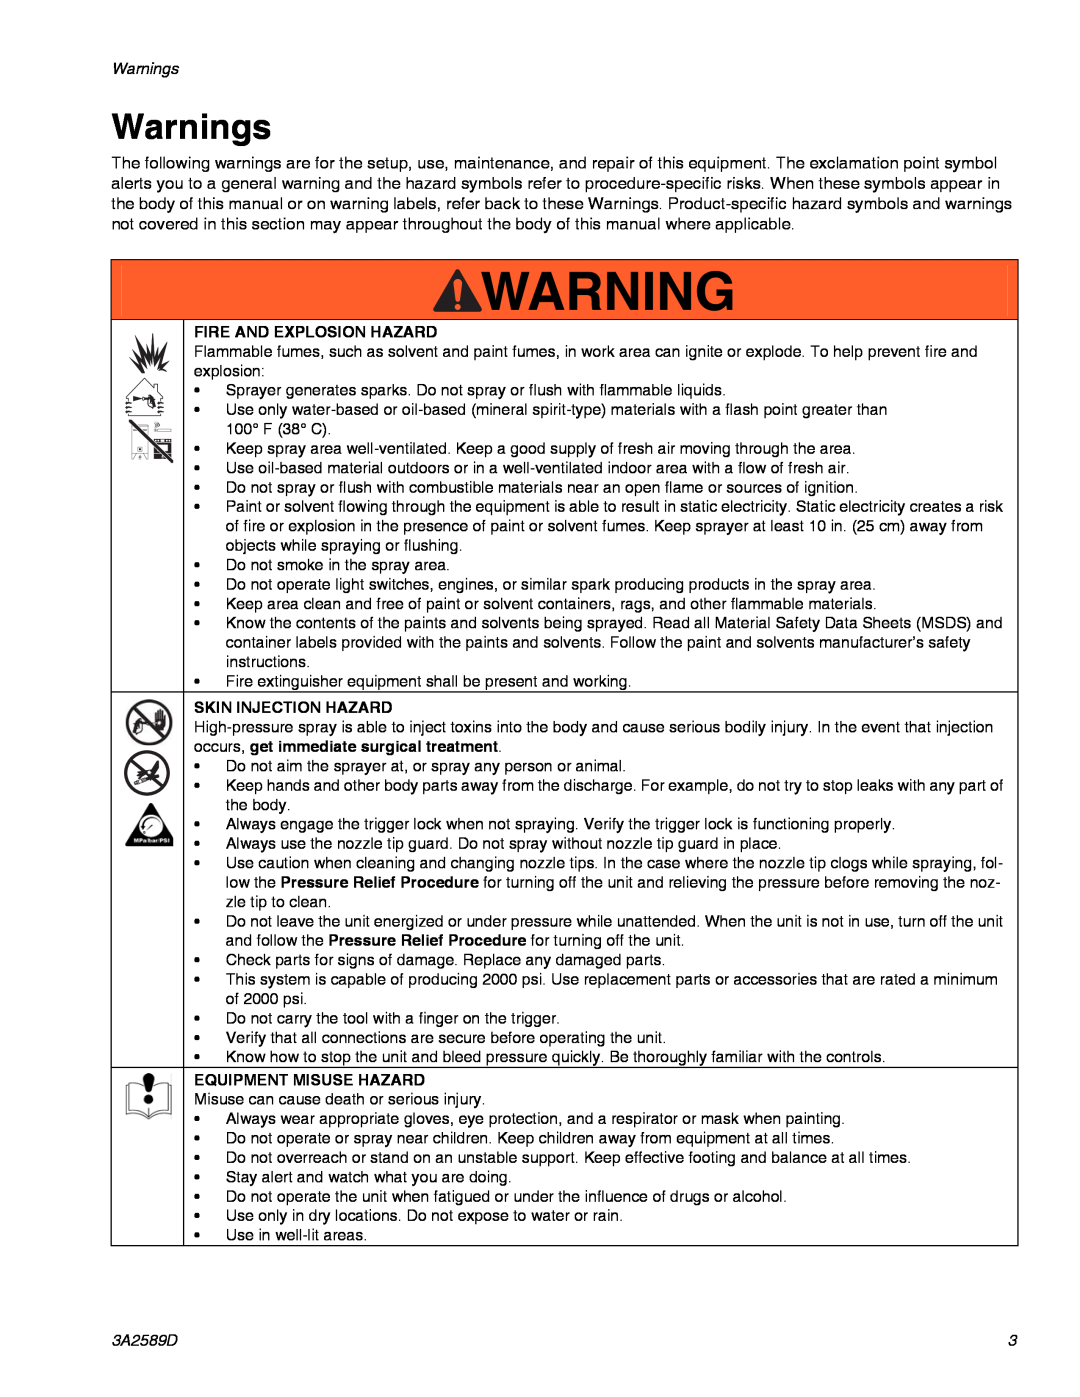 Graco 3A2589D Warnings, Fire And Explosion Hazard, Skin Injection Hazard, Equipment Misuse Hazard 